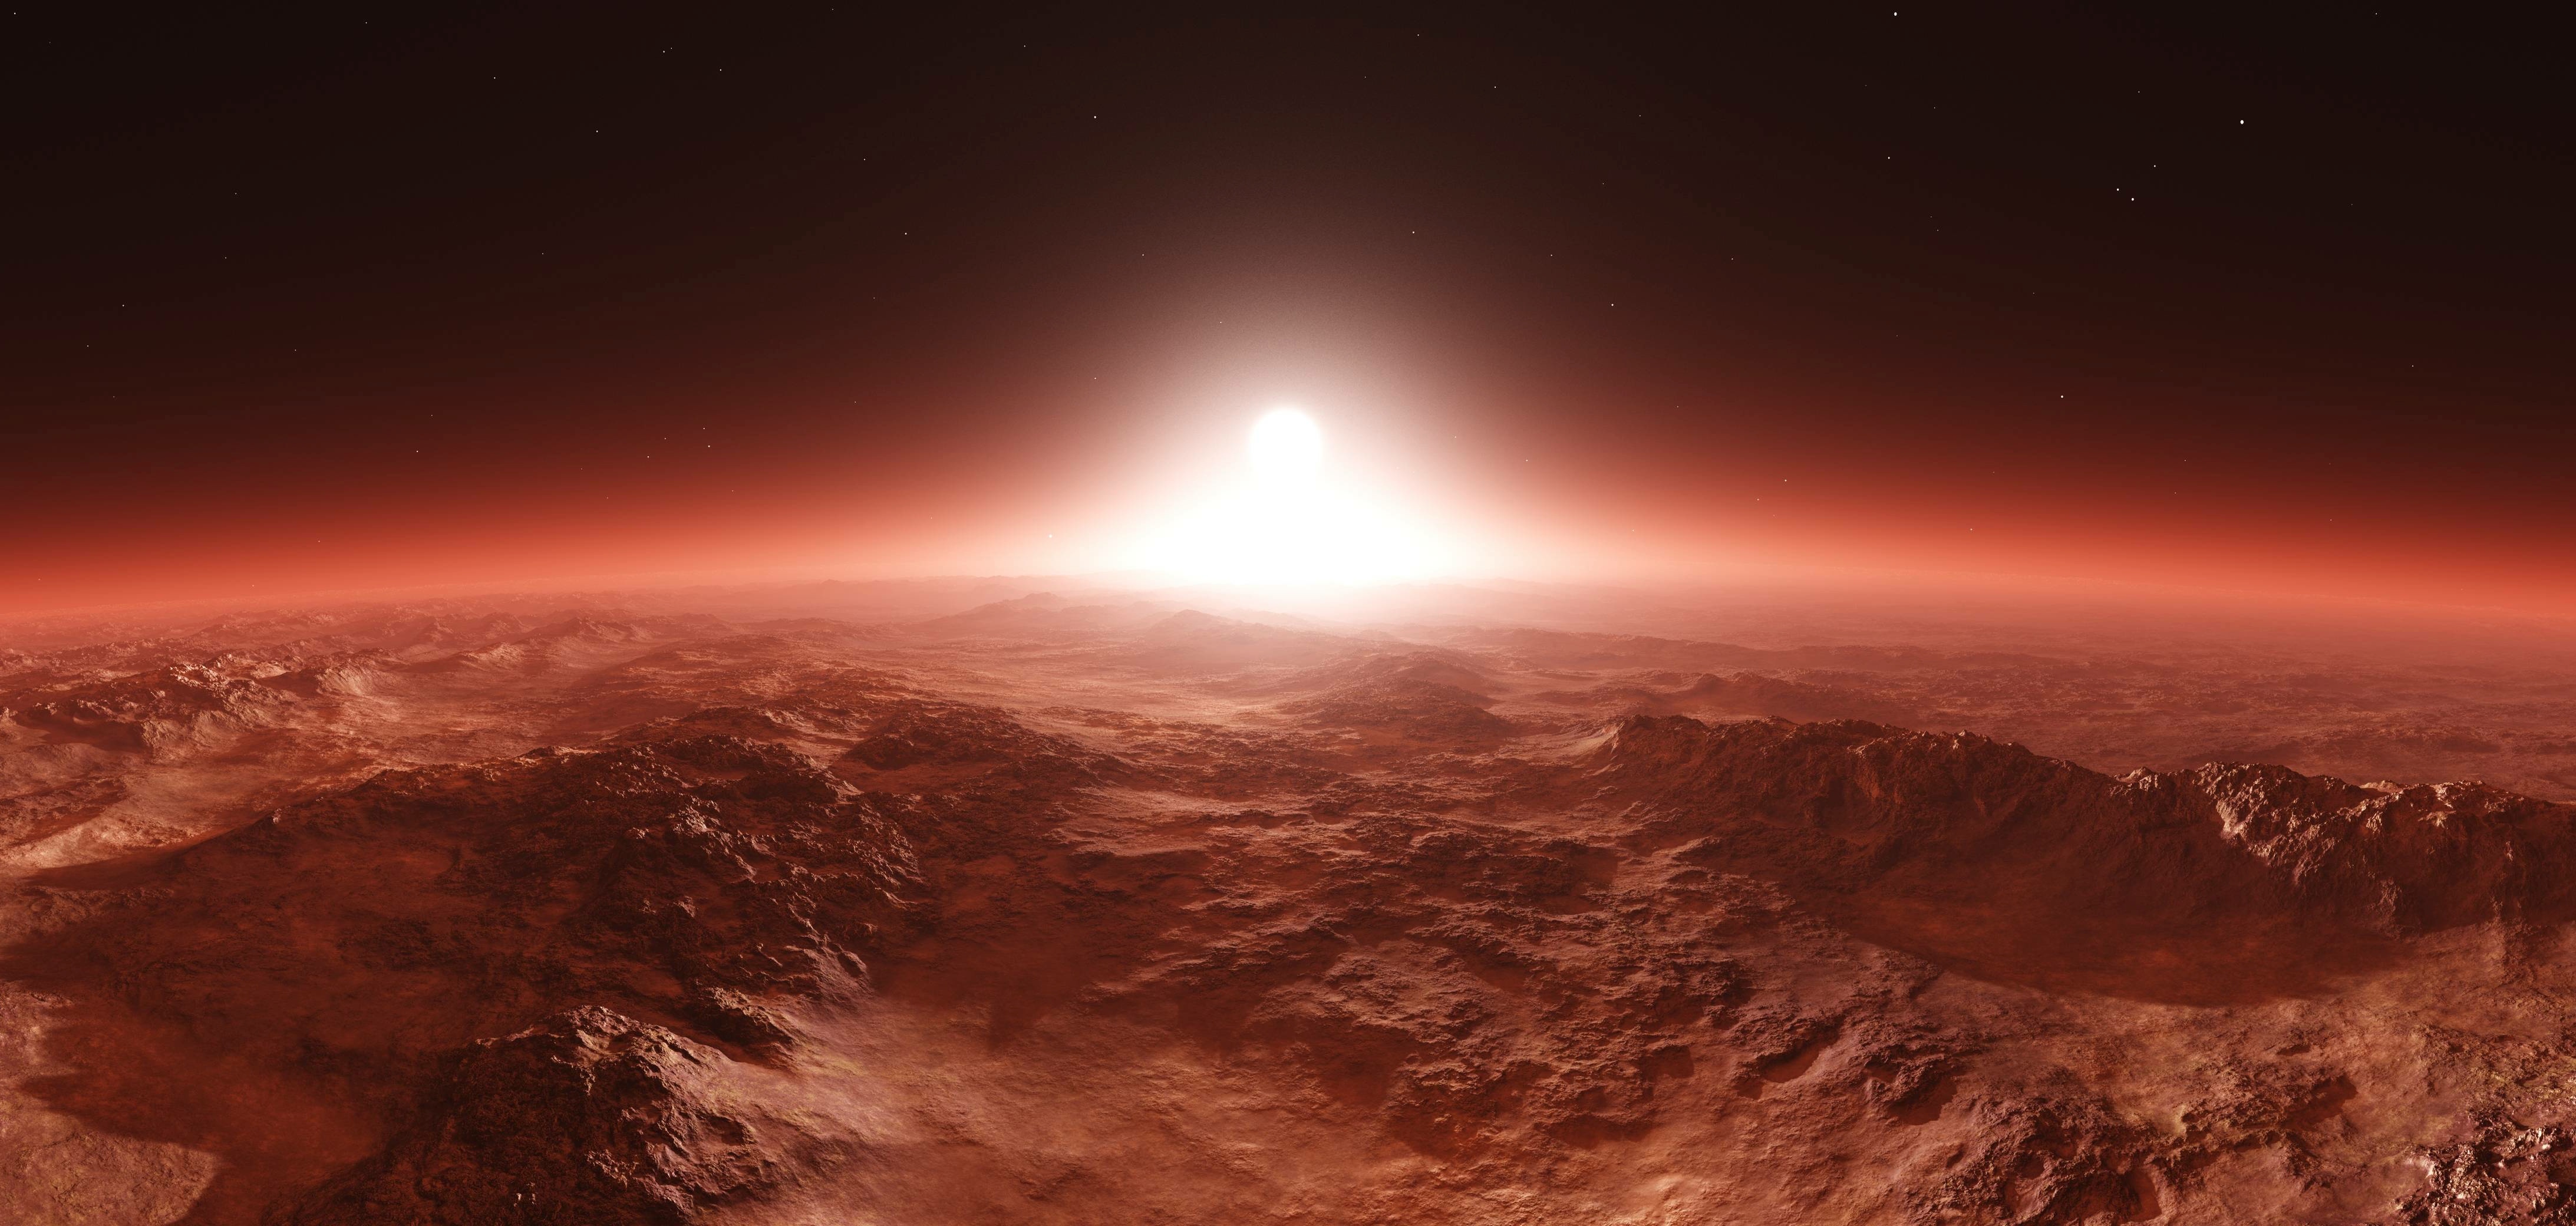 Vue d'artiste de Mars. © ustas, Adobe Stock